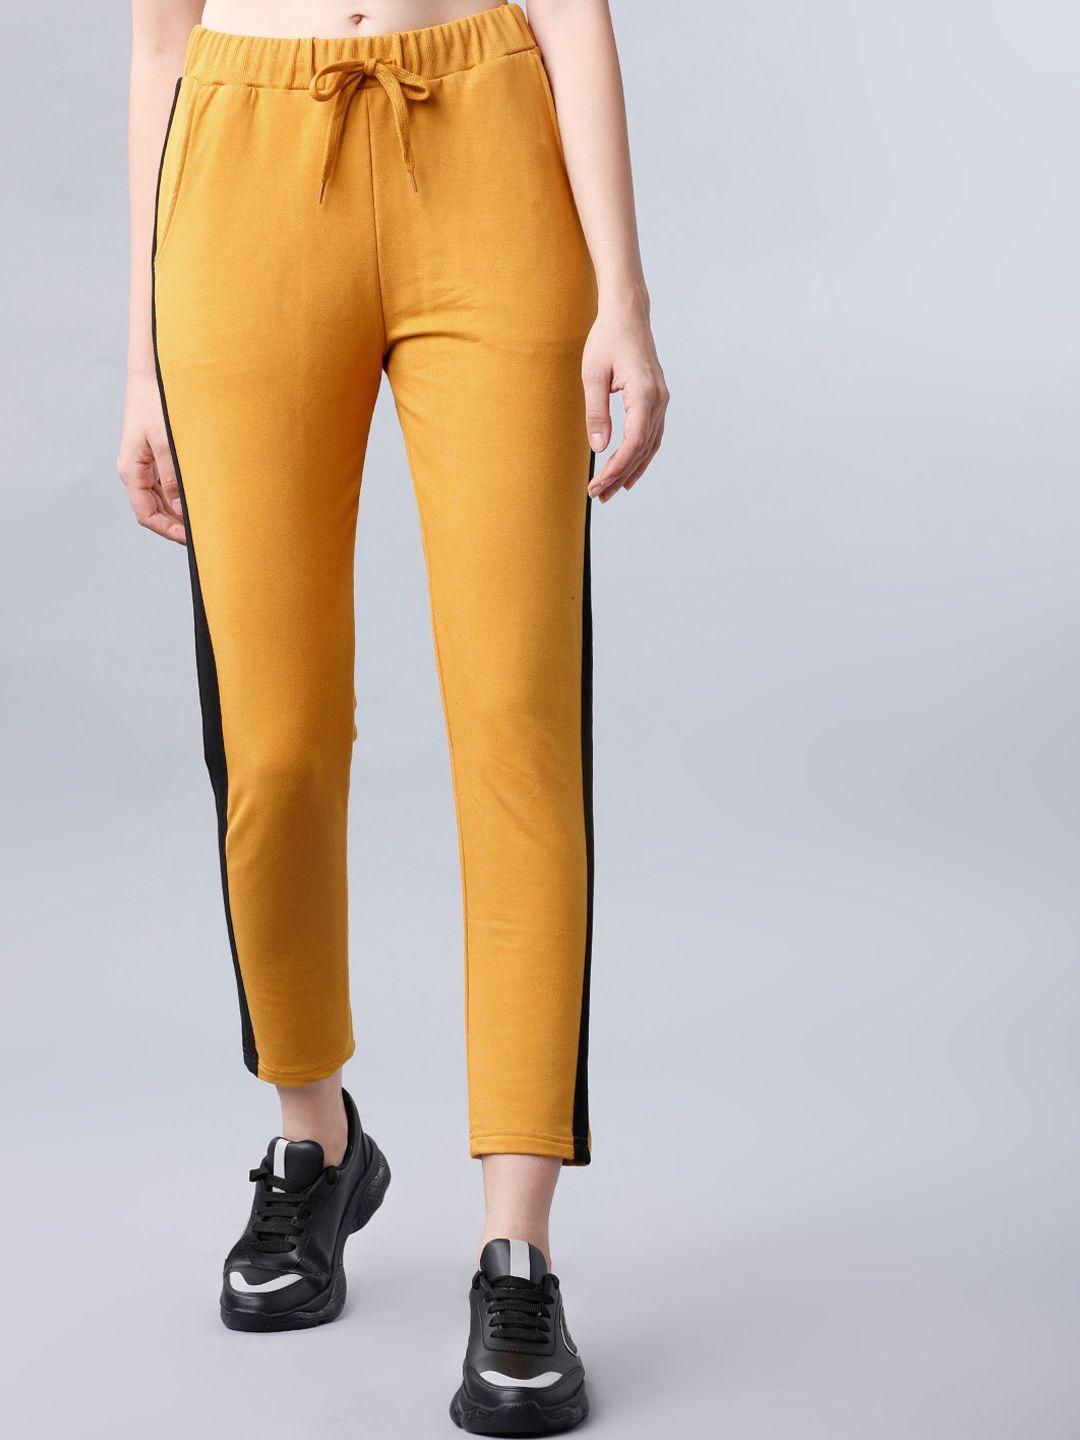 tokyo-talkies-women-mustard-yellow-solid-slim-fit-cropped-track-pants